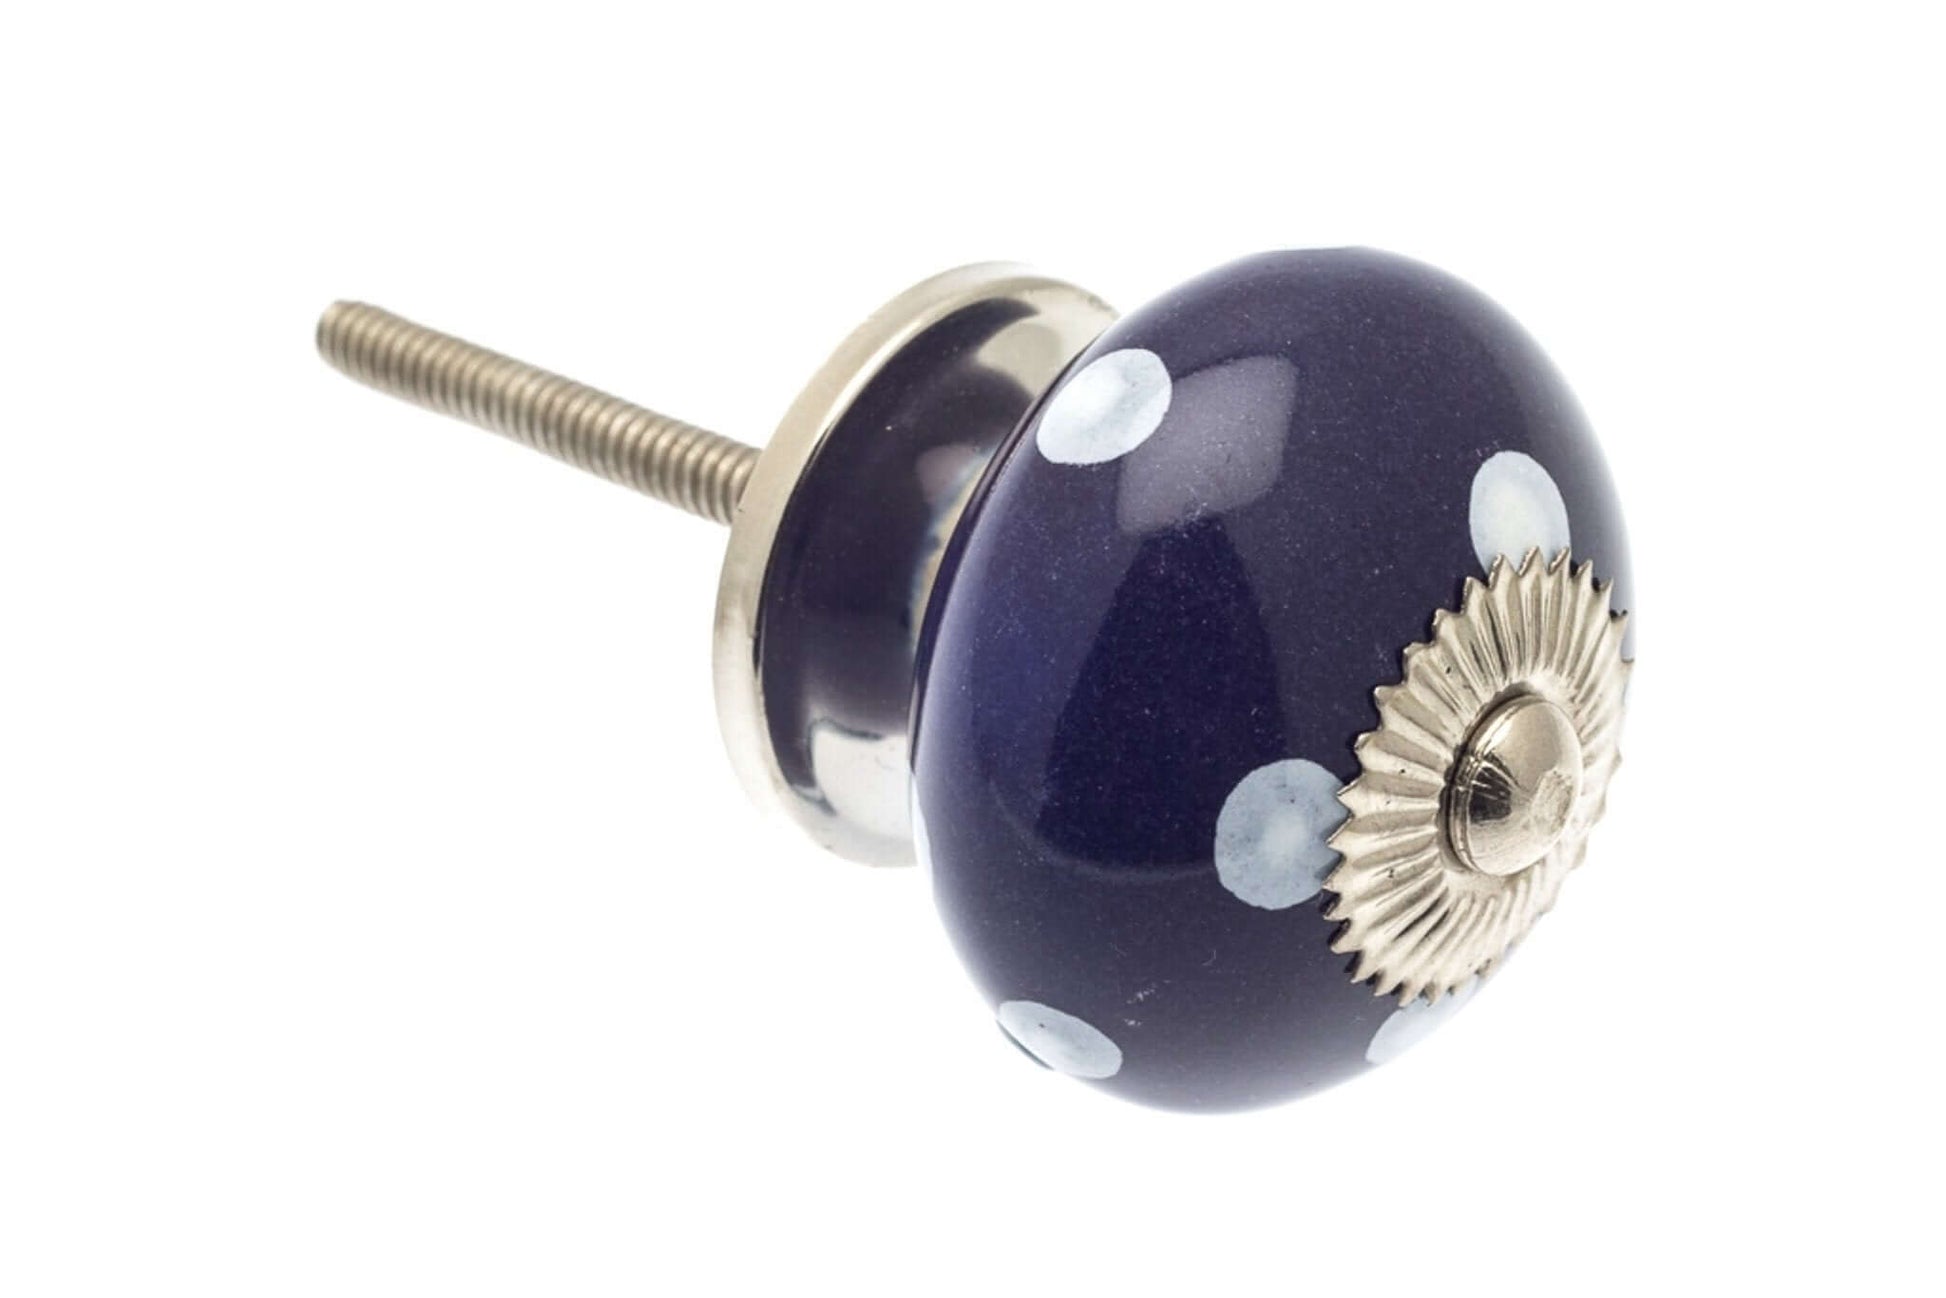 Ceramic Cupboard Knobs - Round Ceramic Knob Purple With White Spots / Dots 40mm (MT-340)